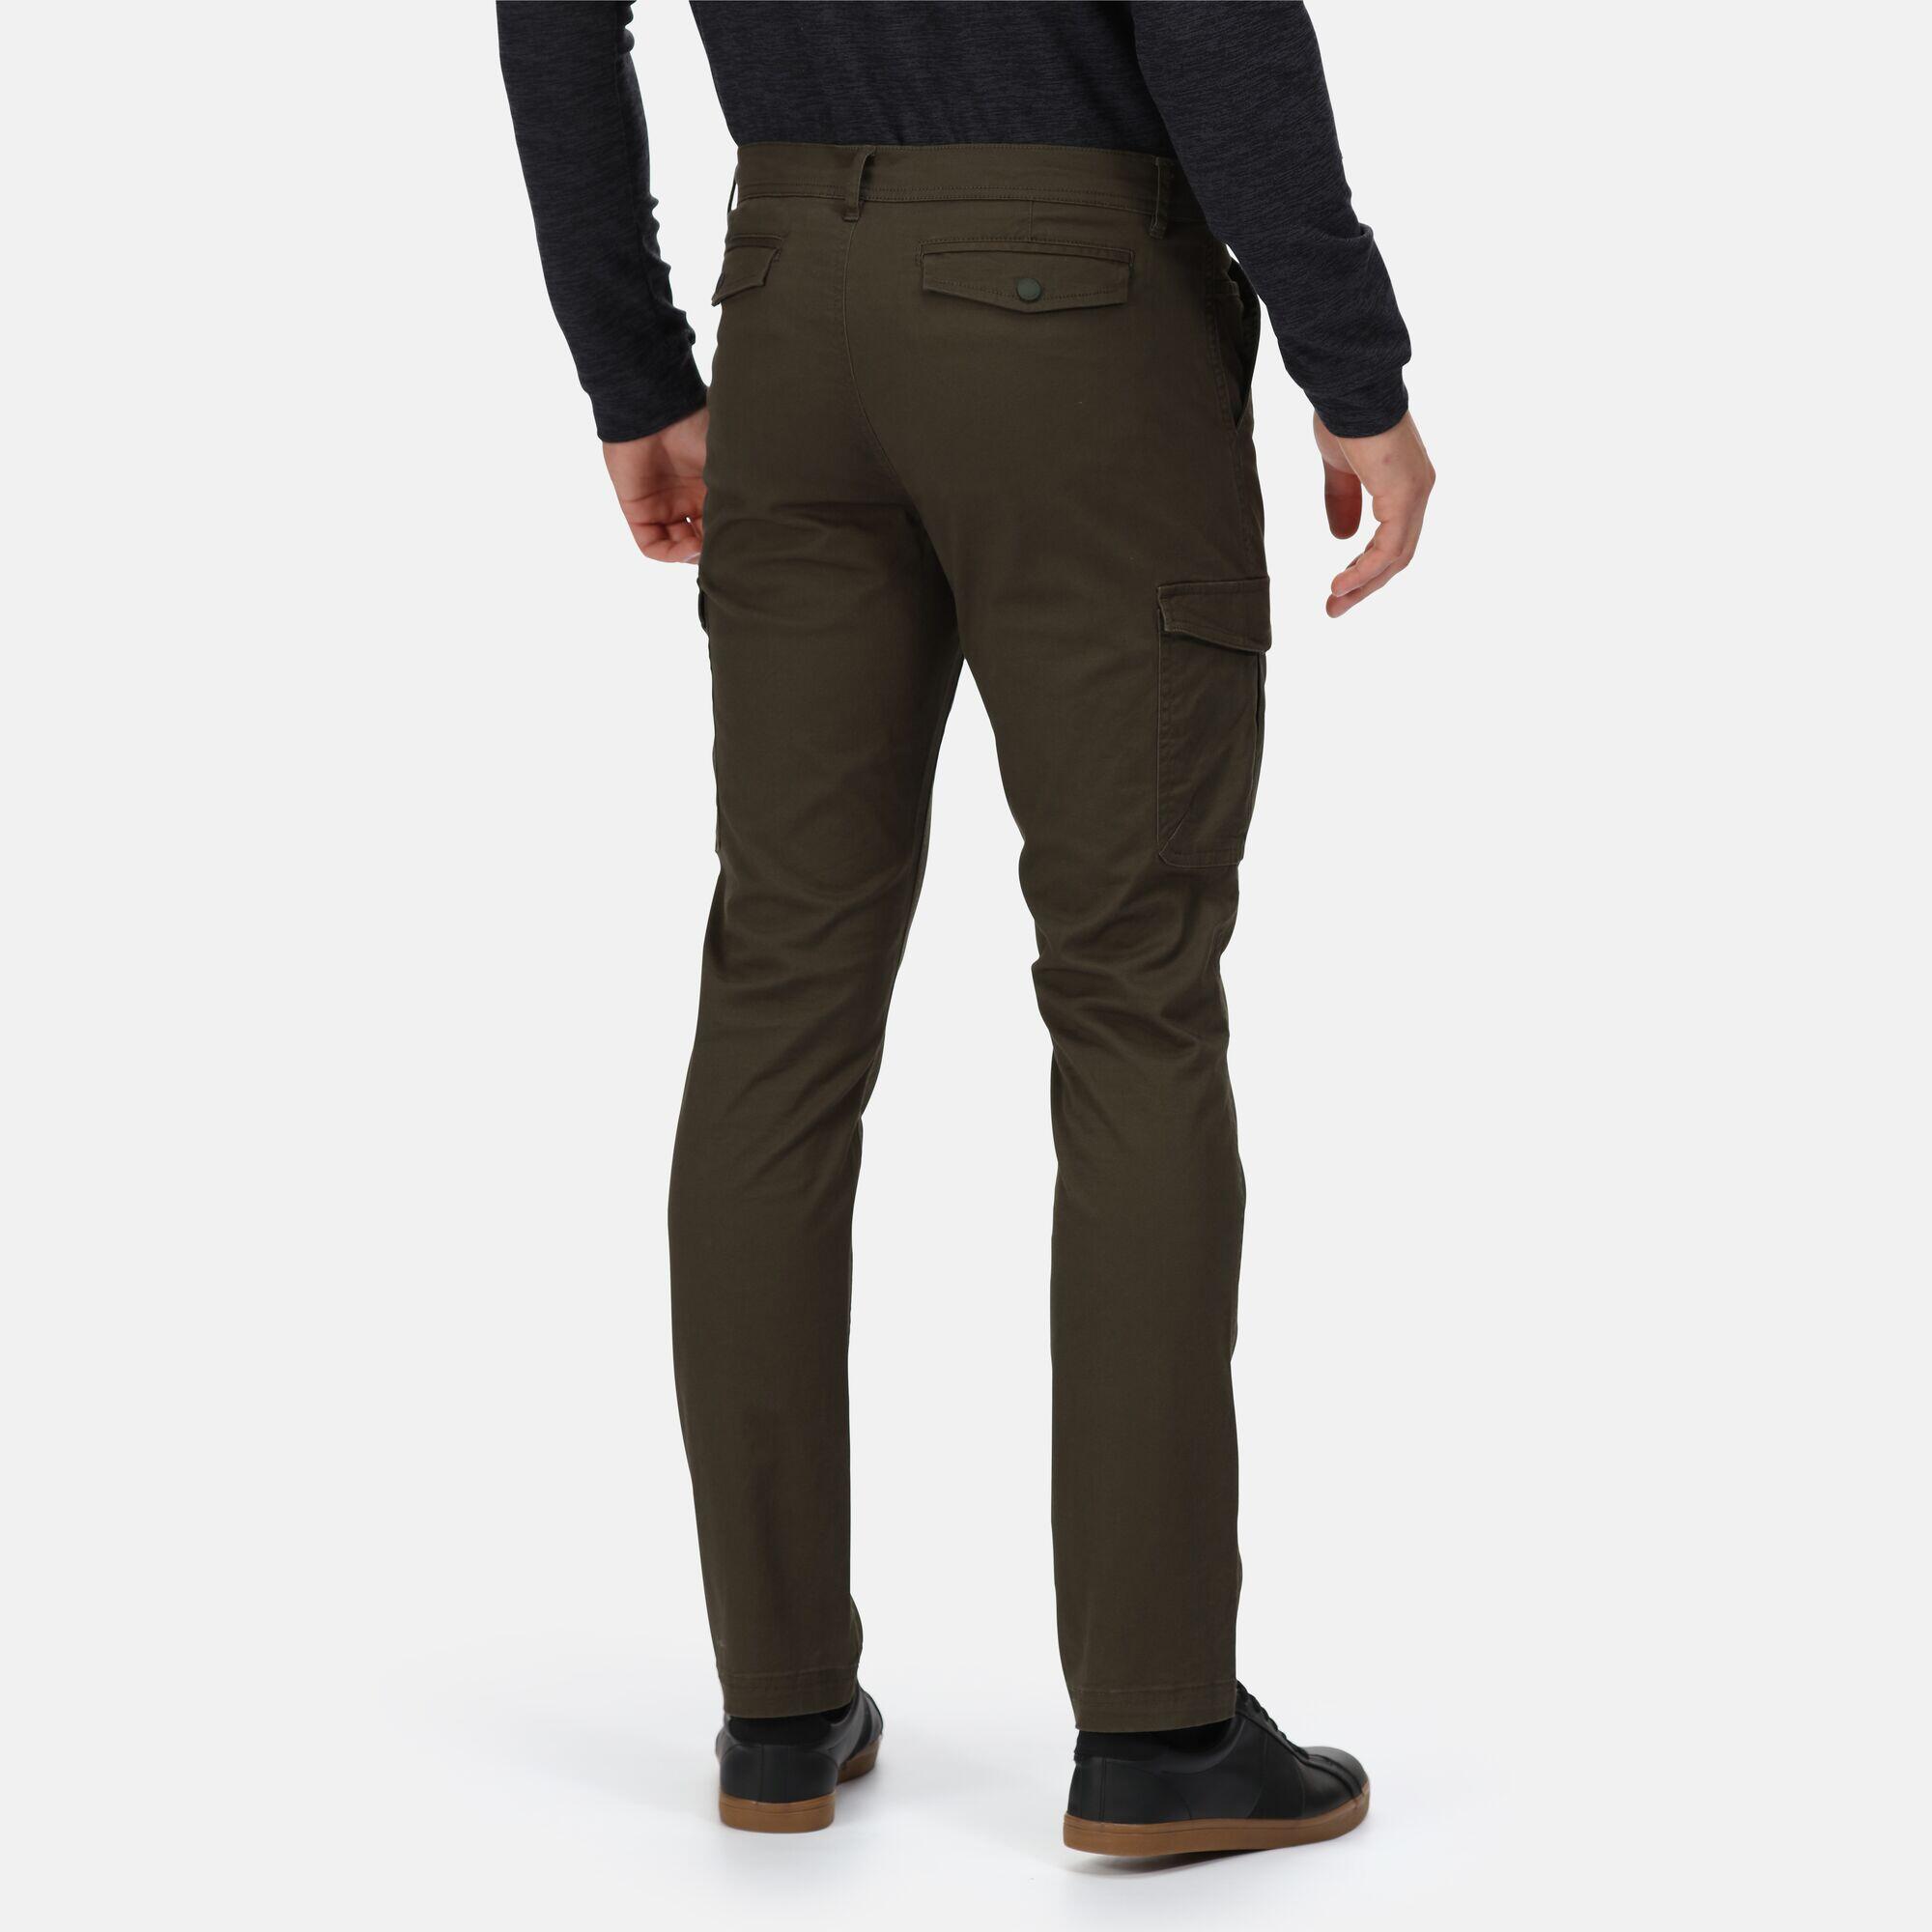 Bryer II Men's Walking Cargo Trousers - Dark Khaki 2/5